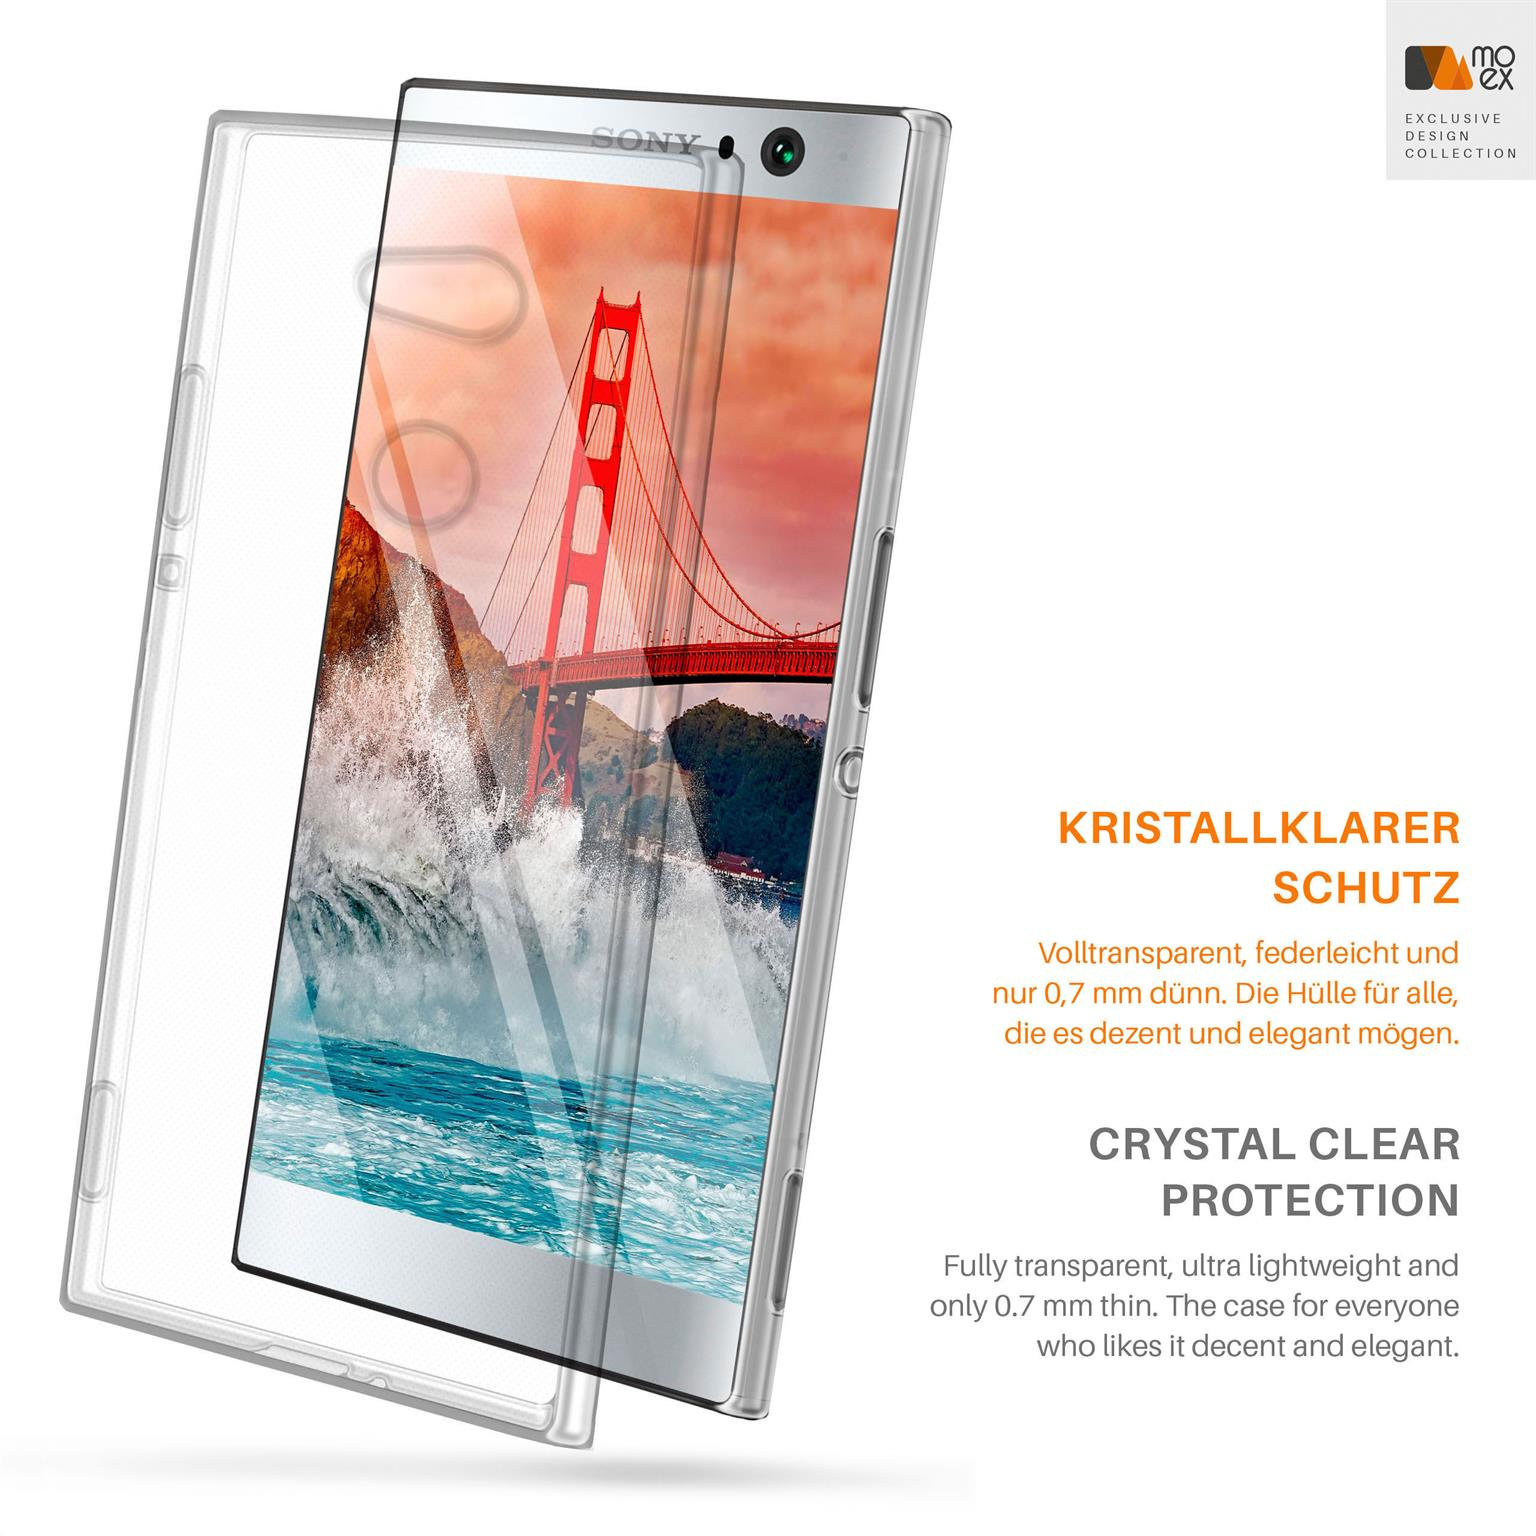 MOEX Crystal-Clear Case, Aero Backcover, Xperia XA2, Sony,